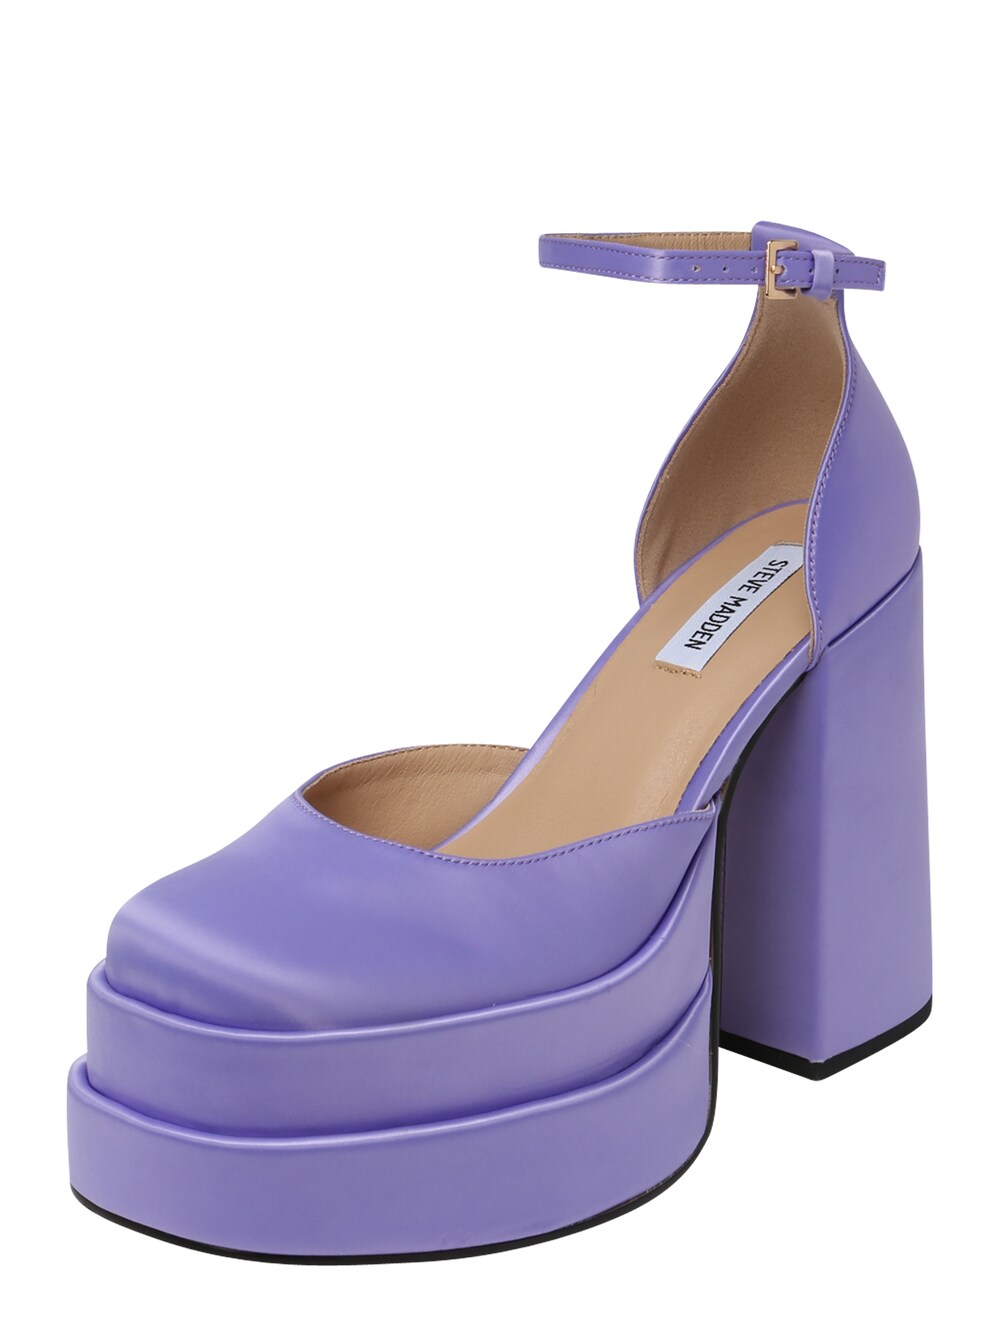 Туфли-лодочки с ремешком на пятке Steve Madden CHARLIZE, фиолетовый